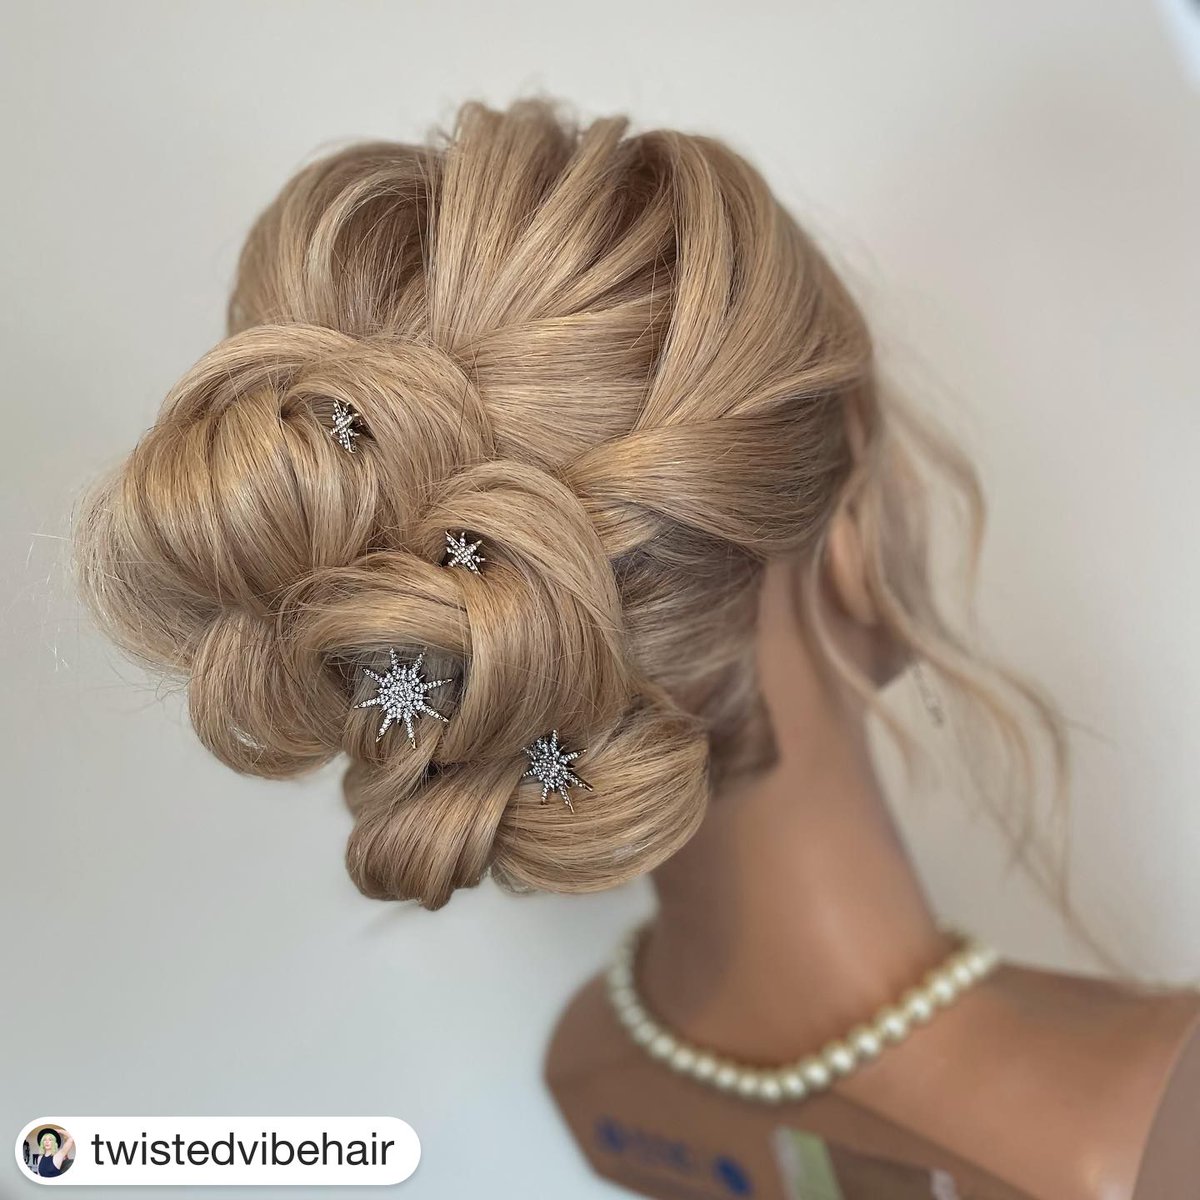 MANNEQUIN:
limage.de/en/mannequin-h…
SHOP NOW 

work by @twistedvibehair

#limage #blond #updo #makeup #updos #braids #braid #weddinghair #wedding #love #Hairstylist #hairstyle #mannequinhead #hairgoals #waves #hair #vintage #love #blondhair #pastelhair #braidedhair